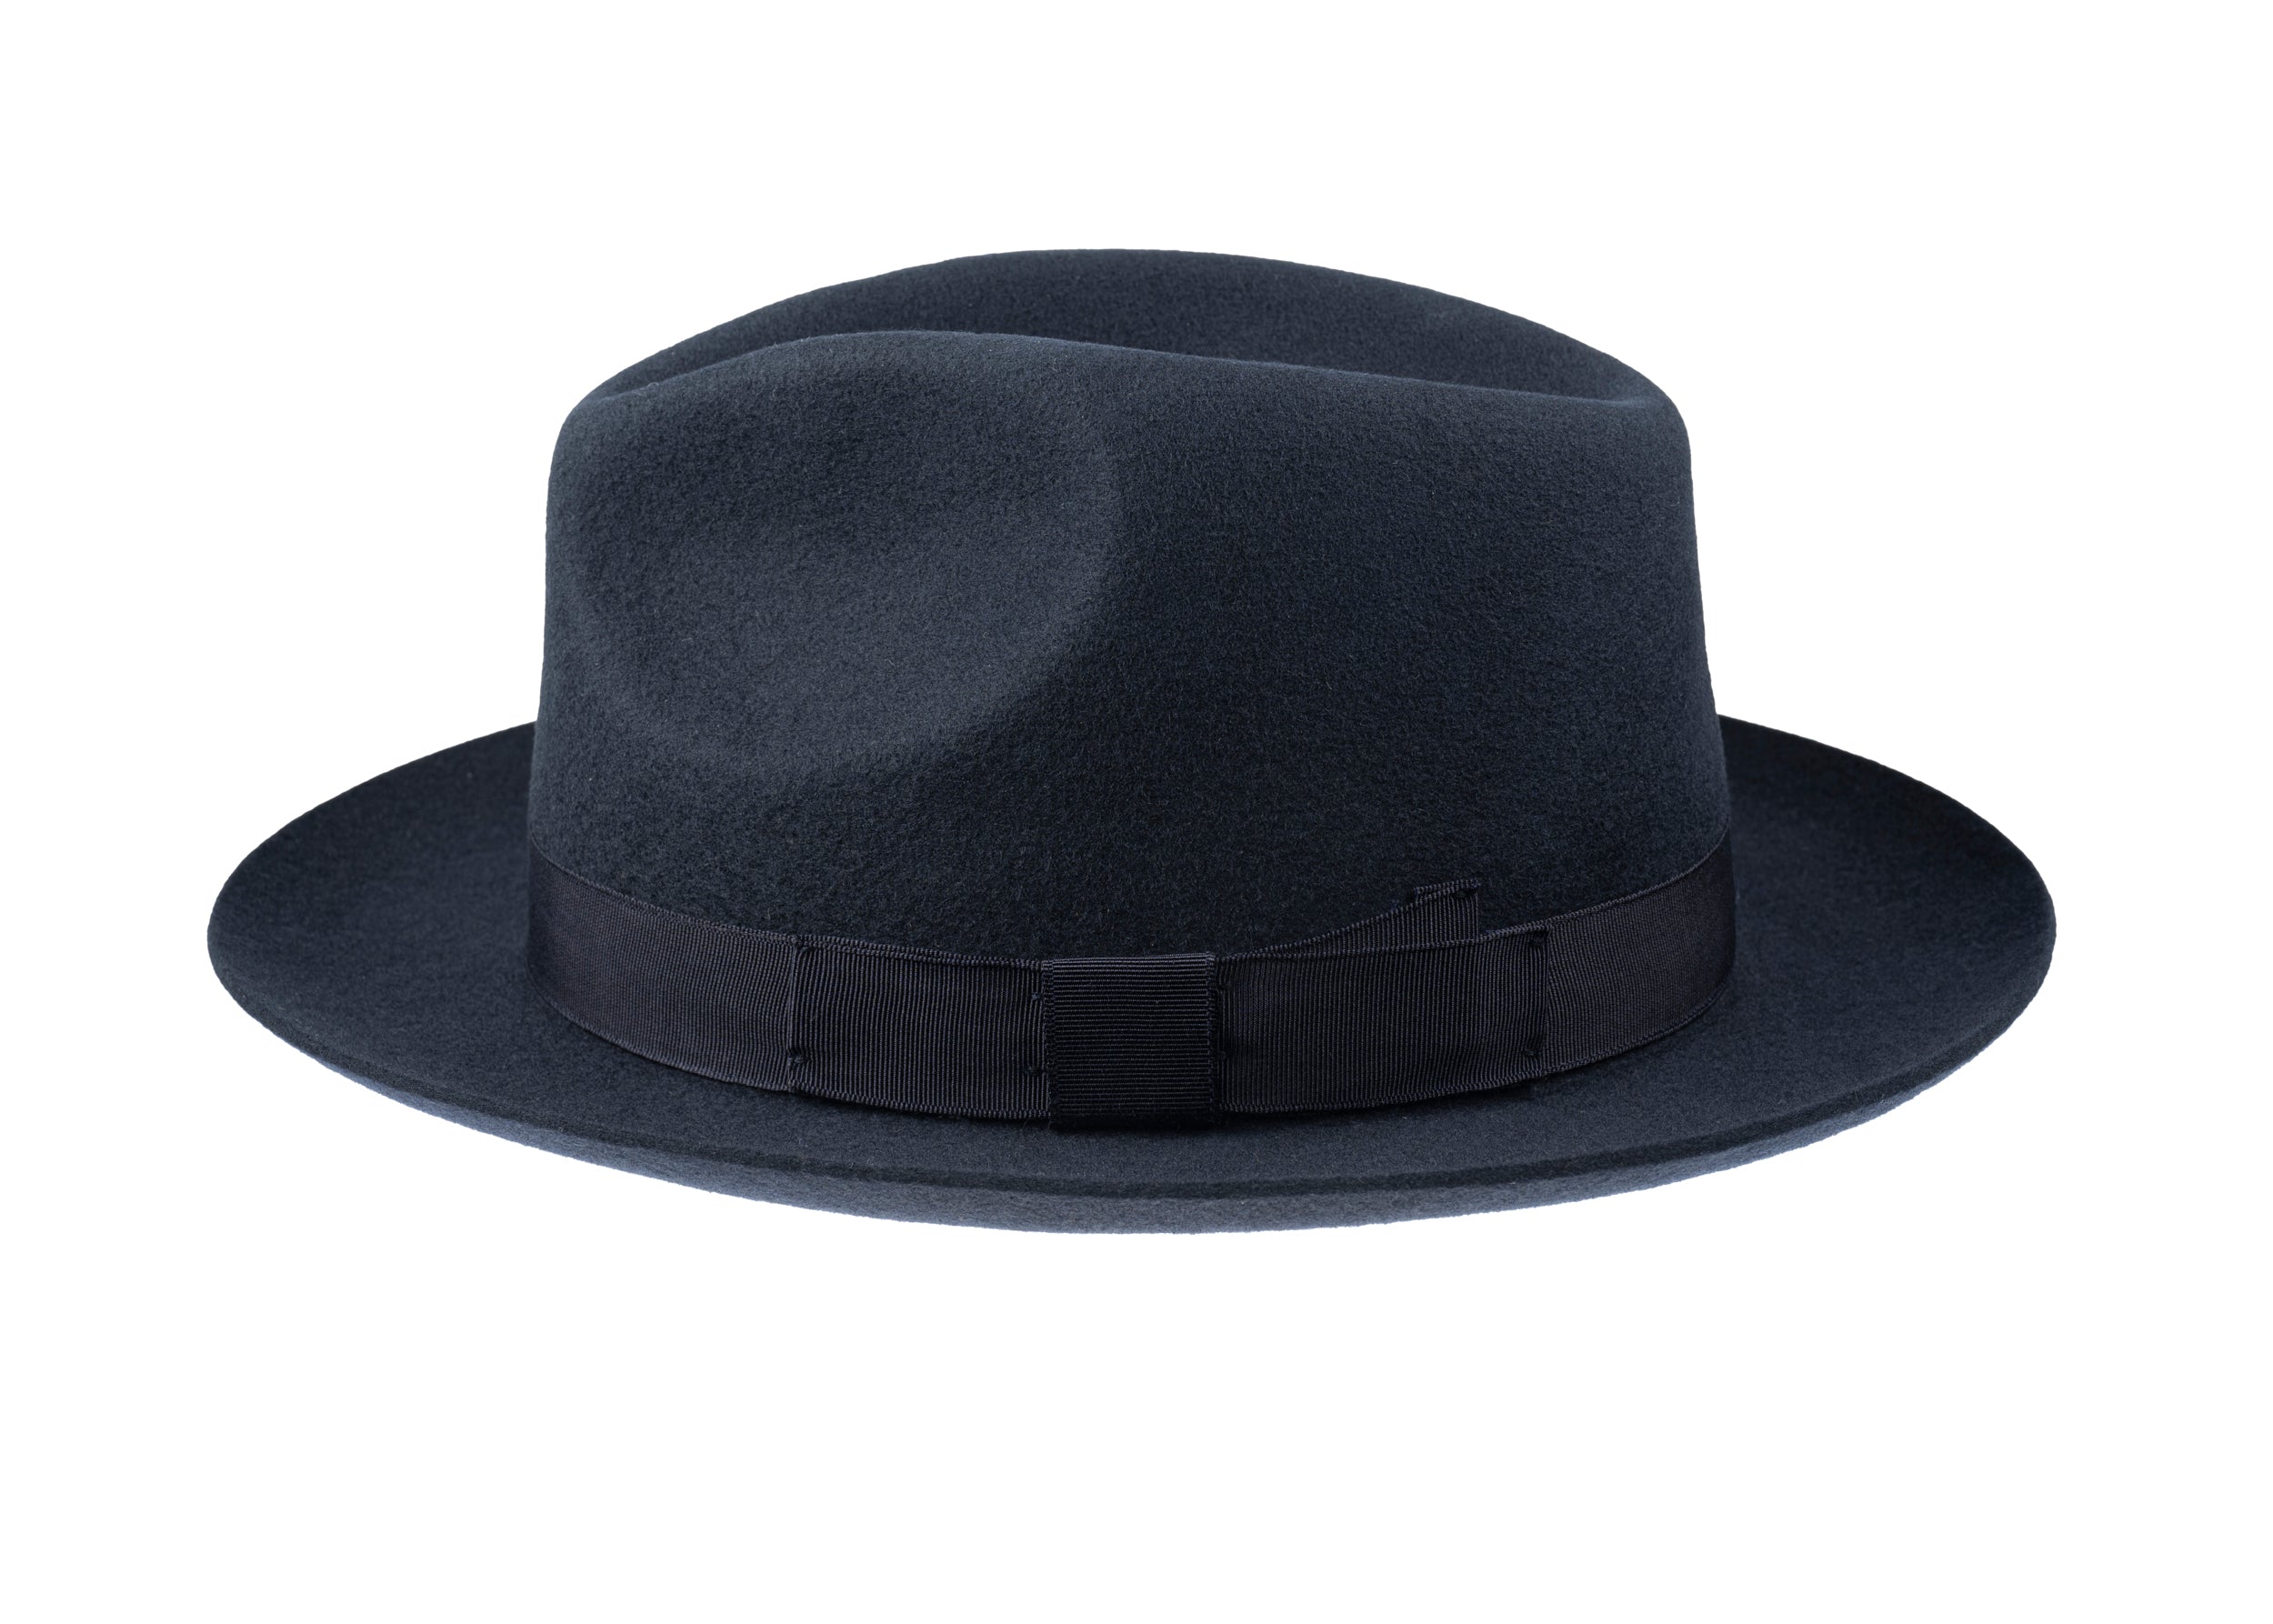 Chepstow Wool Felt Fedora Hat